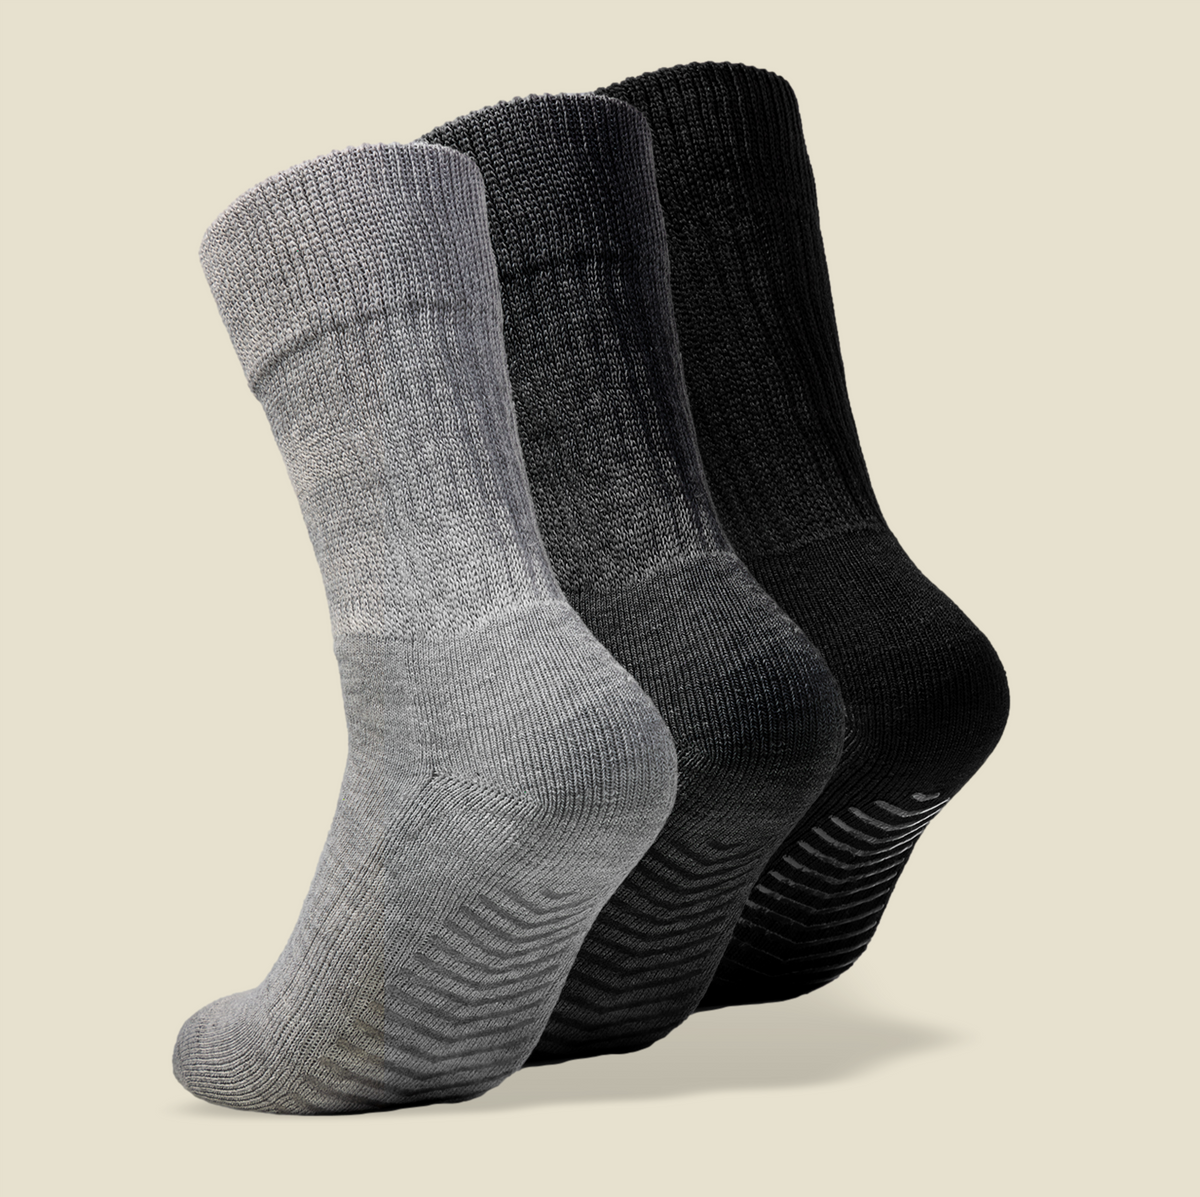 Men's Black/Grey Low Cut Ankle Non Skid Socks - 3 pairs - Gripjoy